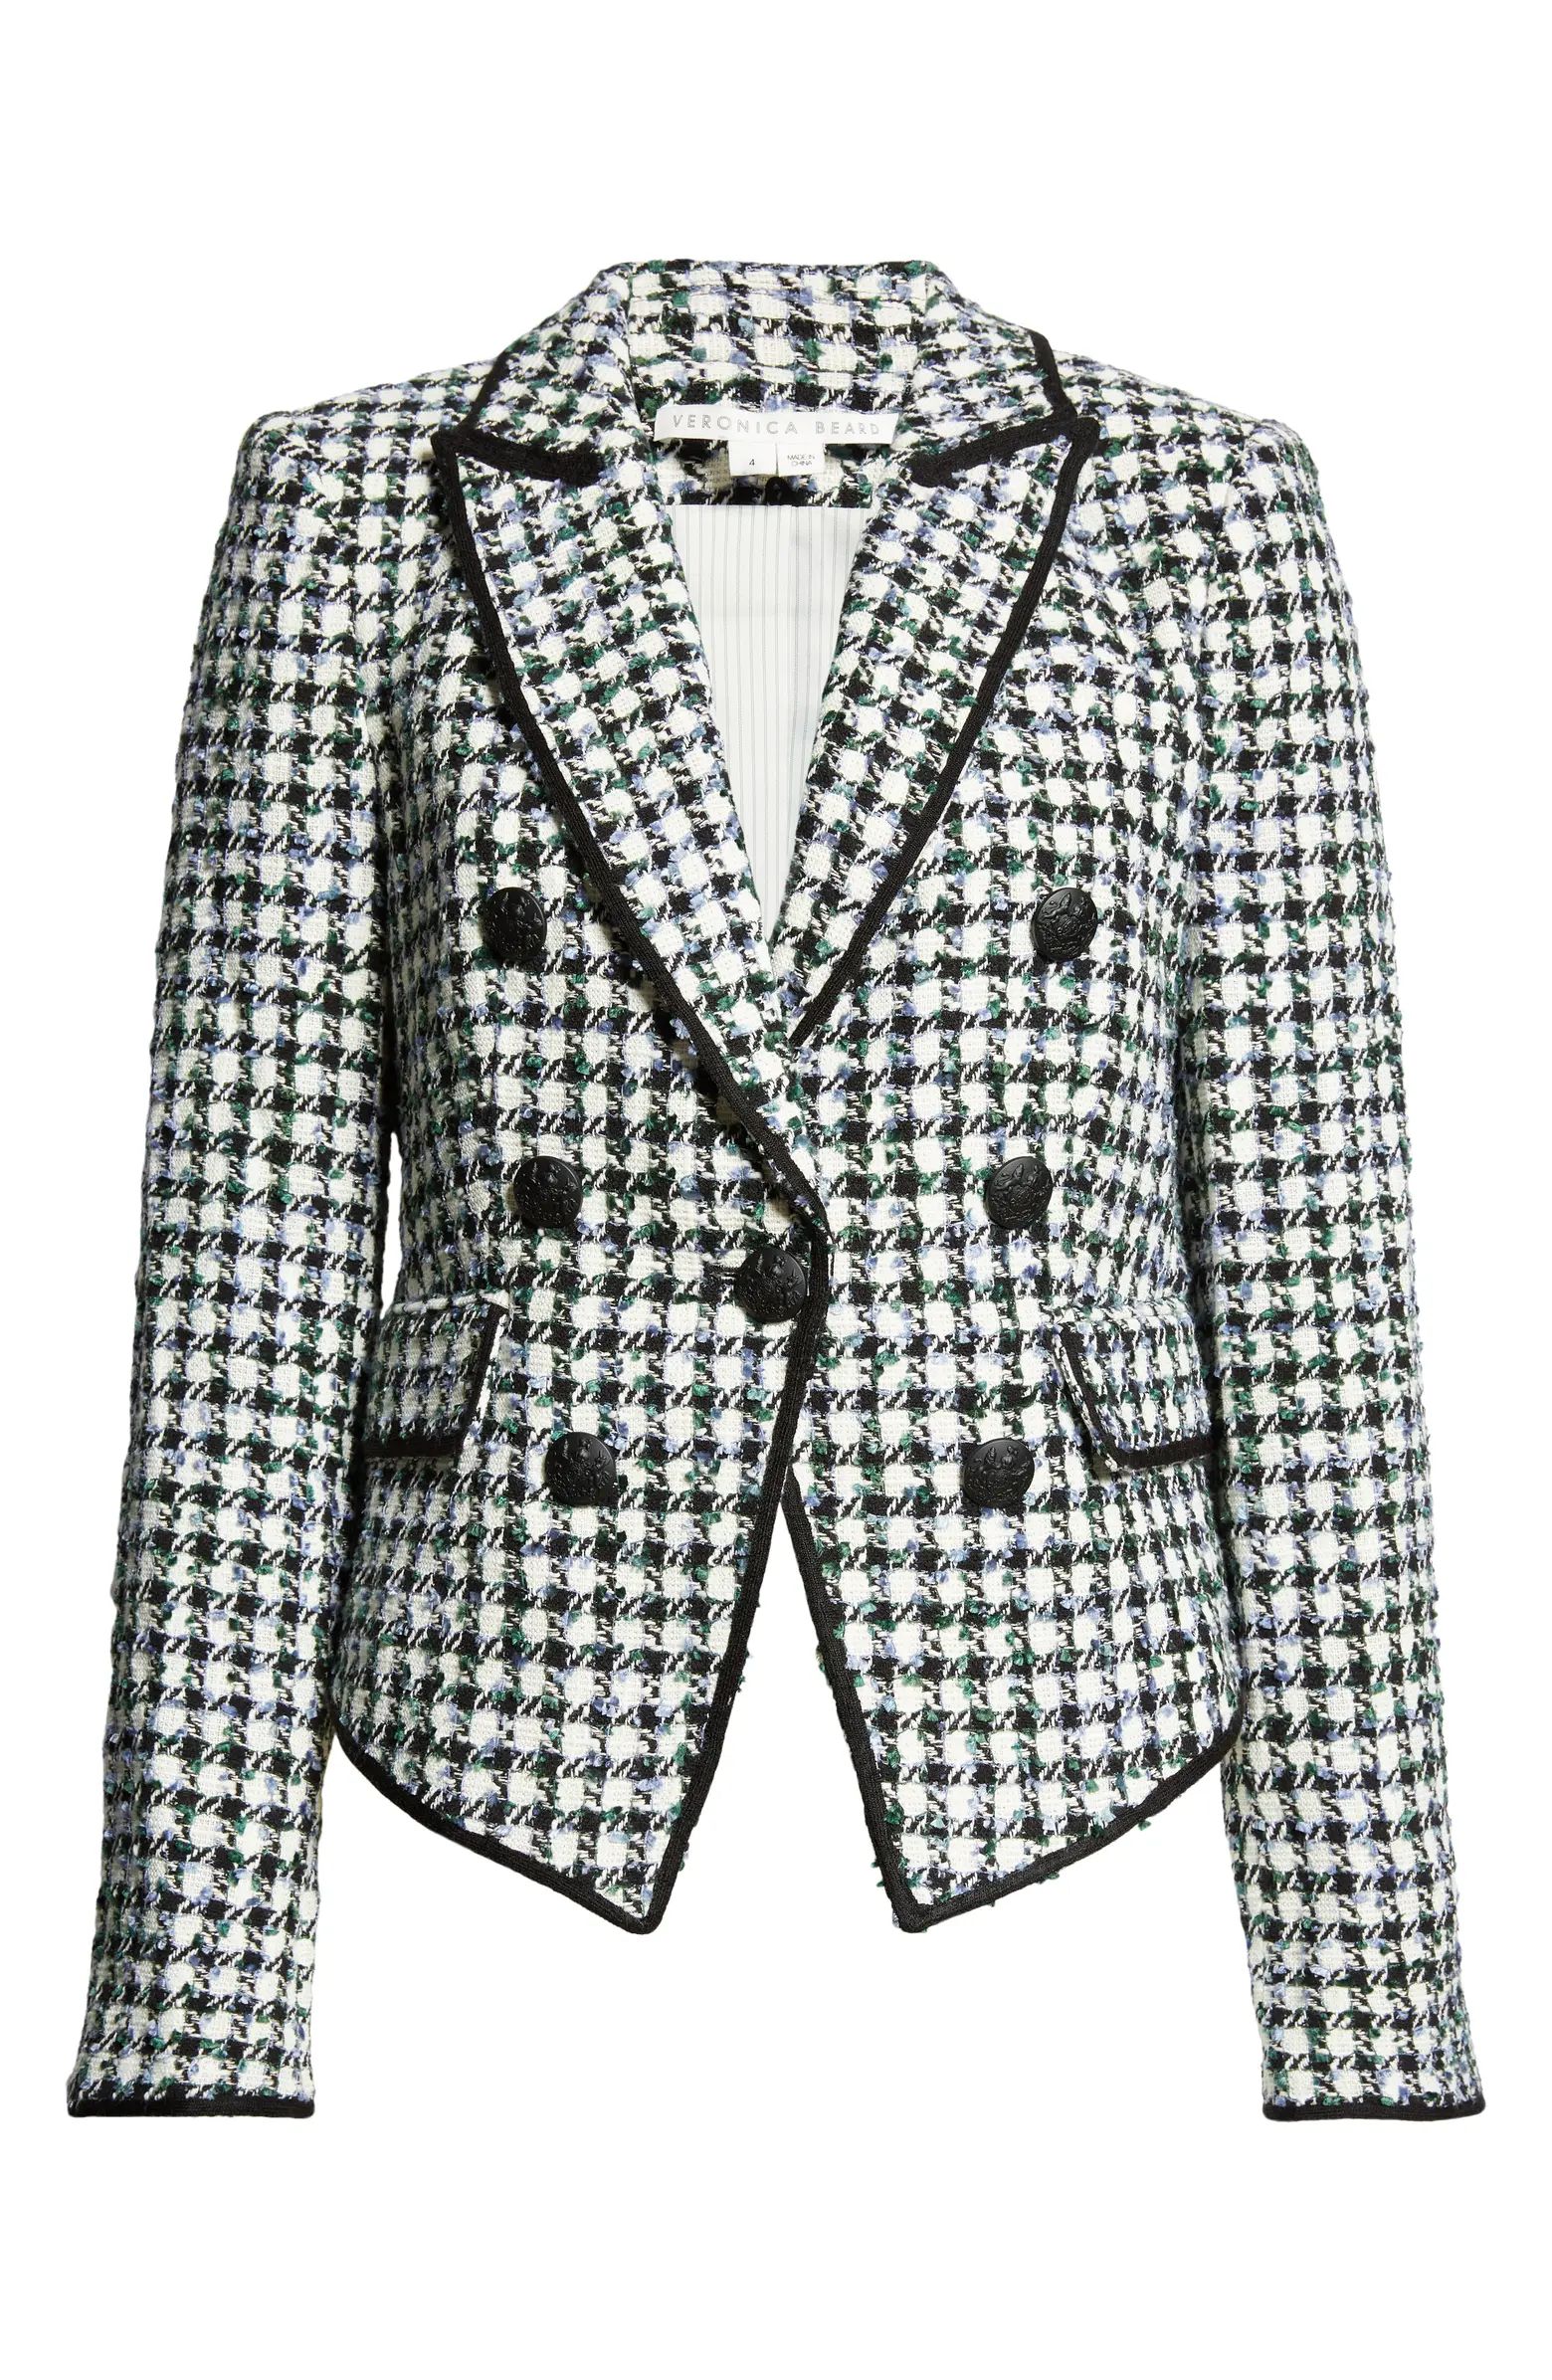 Diego Metallic Check Cotton Blend Tweed Dickey Jacket | Nordstrom